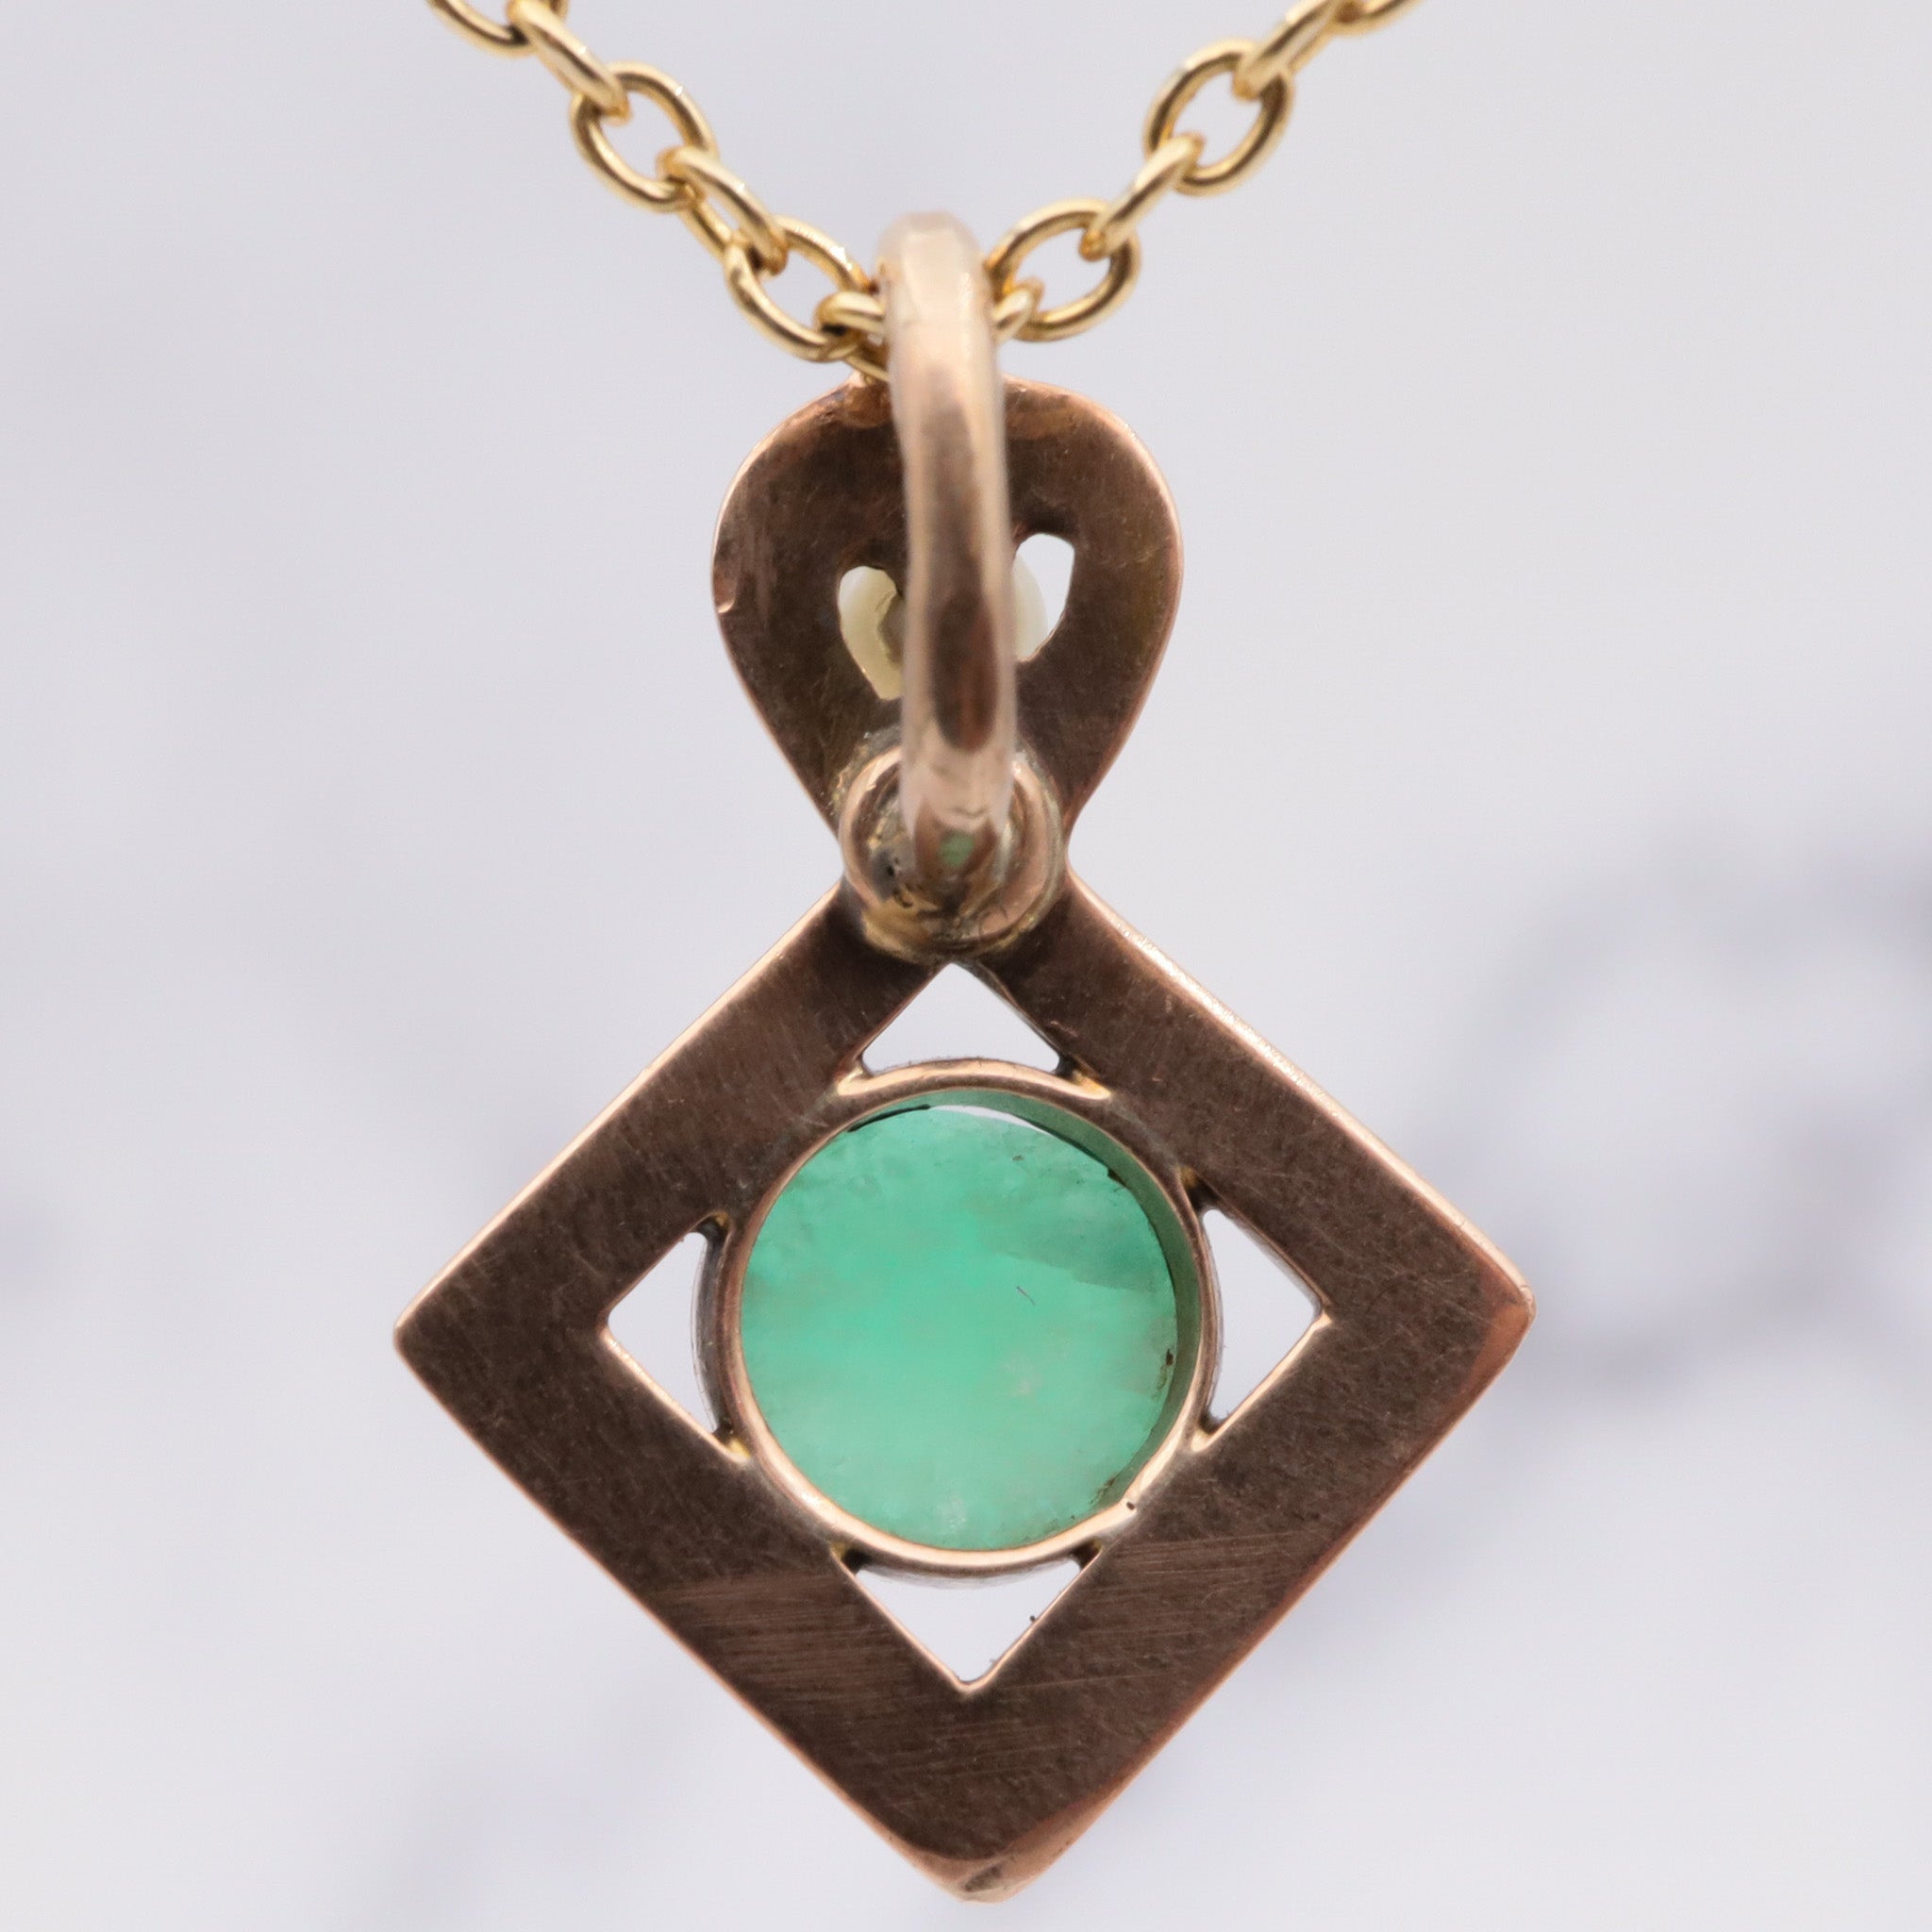 Vintage 14K gold, jade & pearl pendant